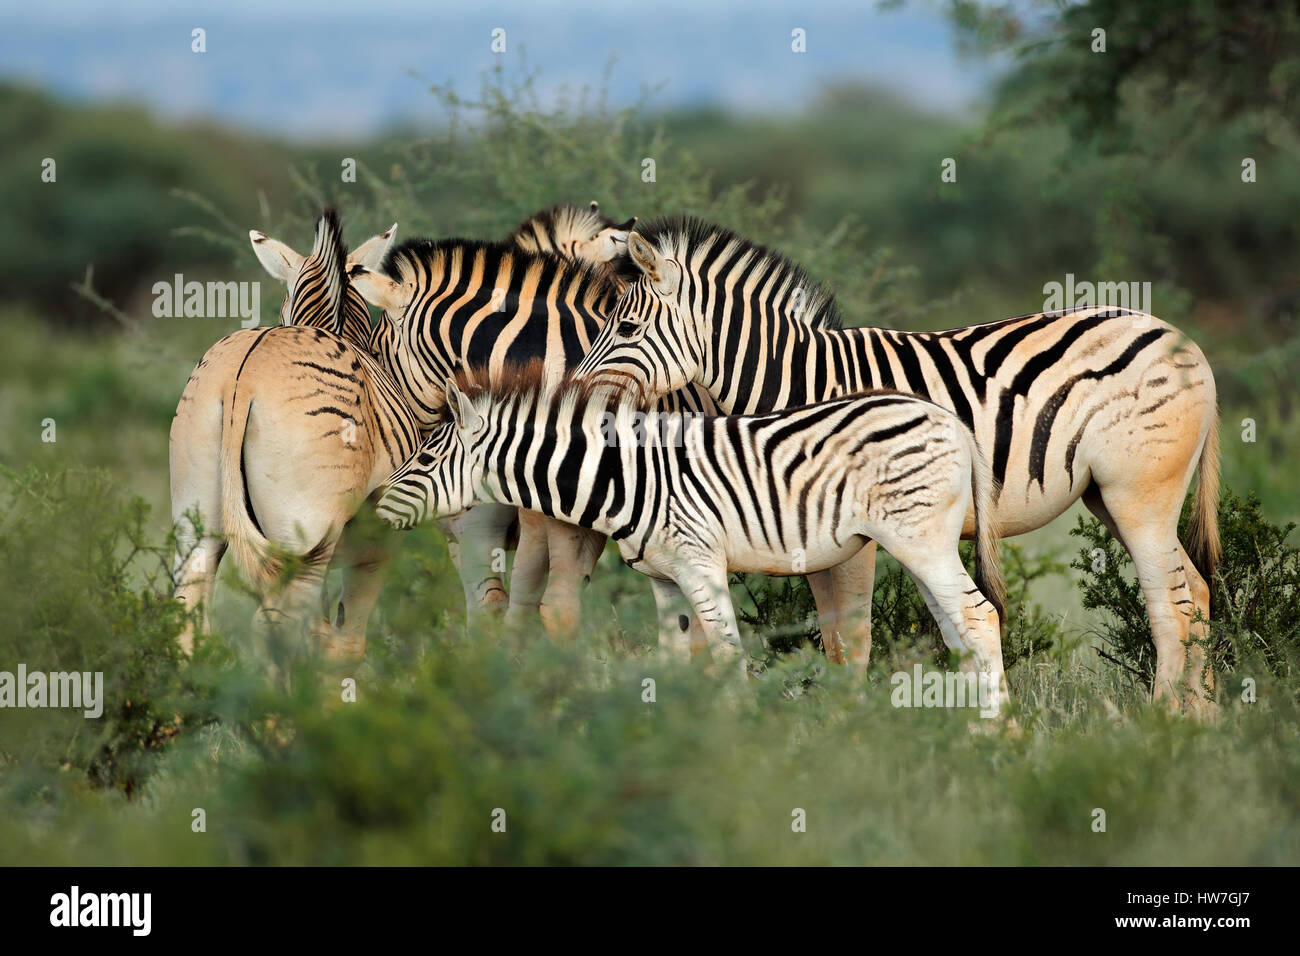 Plains (Burchells) zebras (Equus burchelli) in natural habitat, South Africa Stock Photo